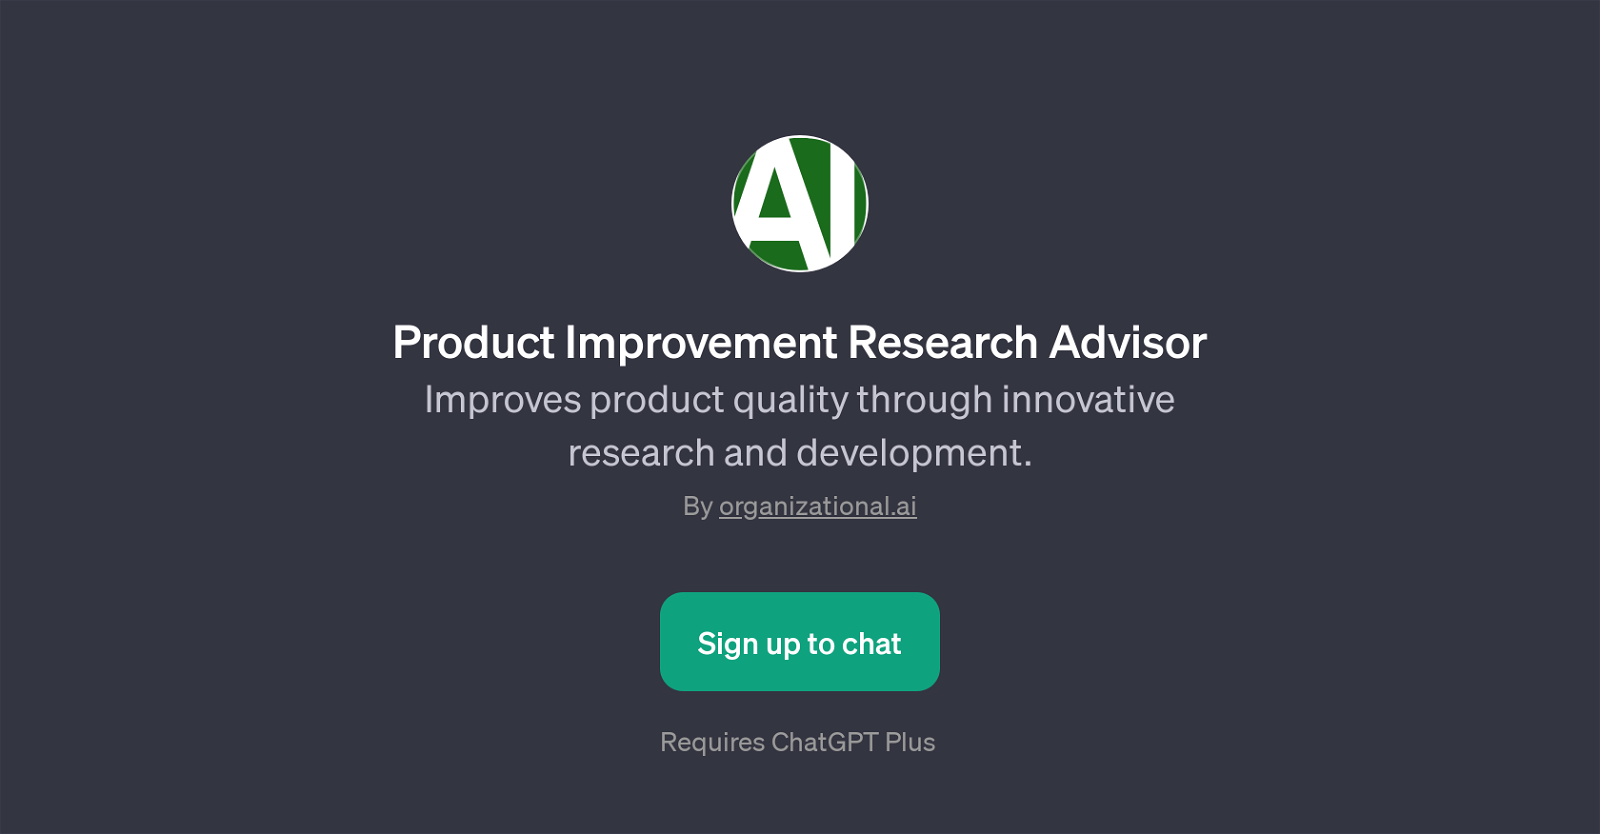 Product Improvement Research Advisor website